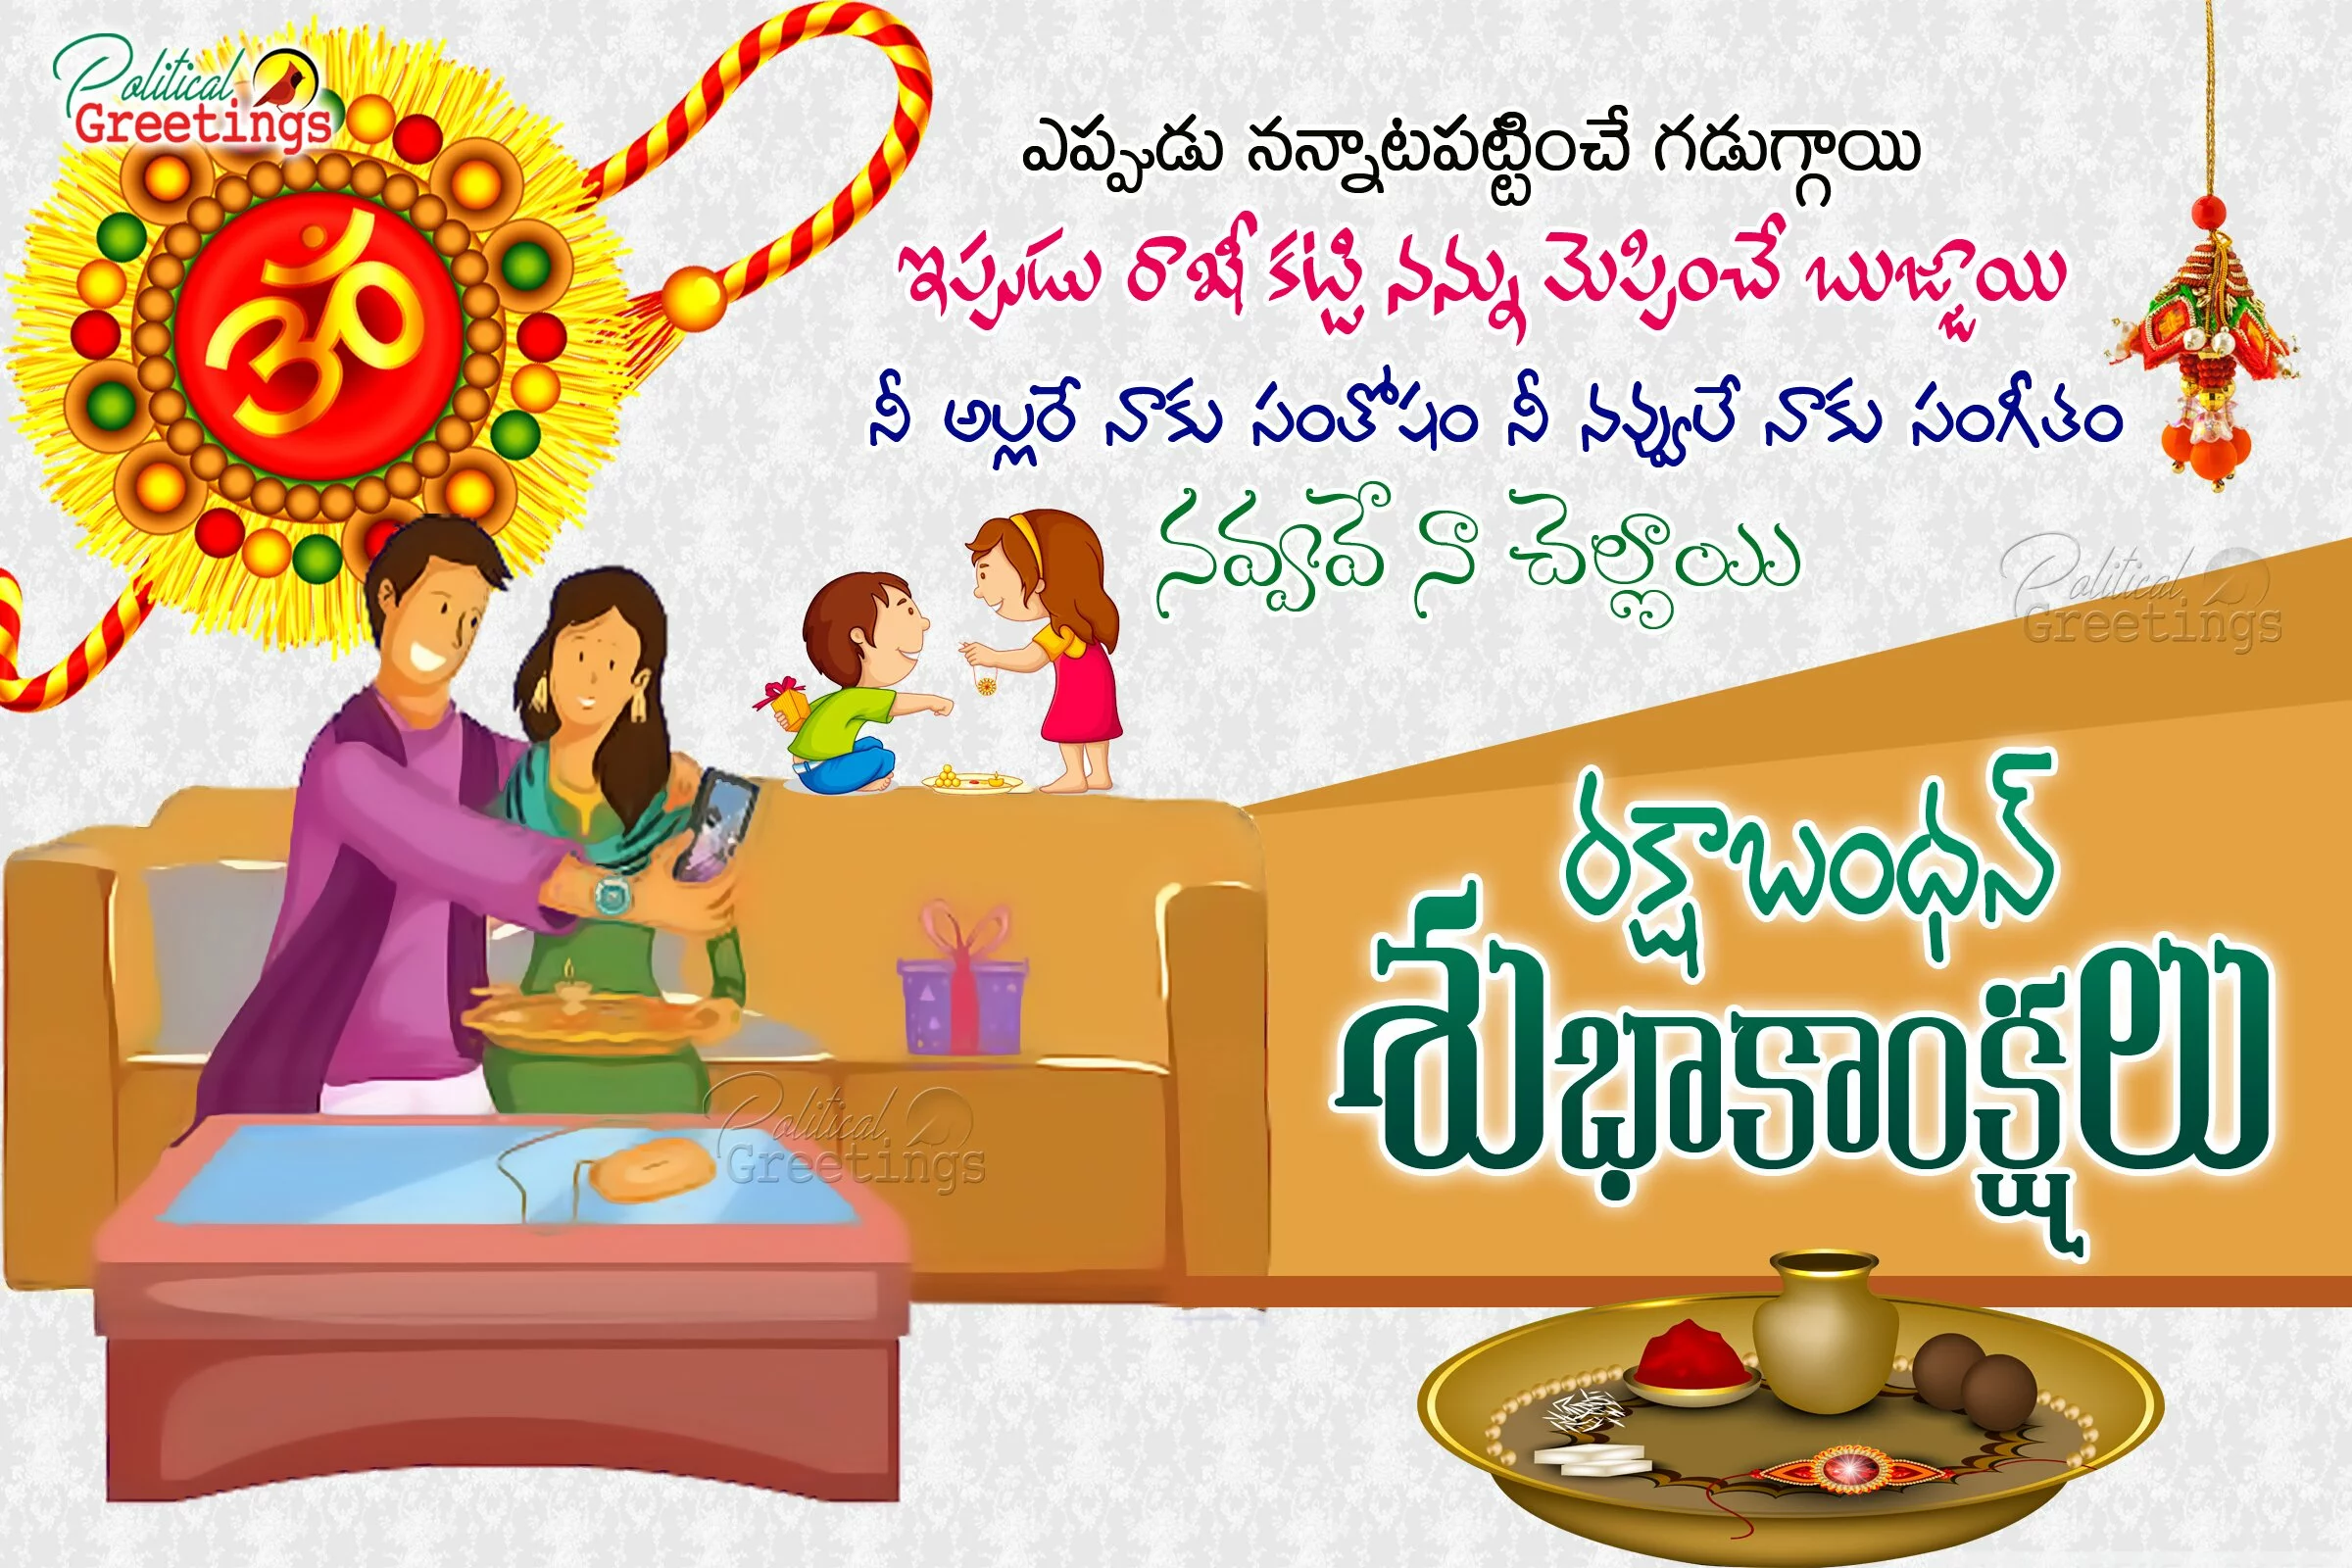 Happy Rakshabandhan Telugu Greetings with Cute Brother and Sister Hd Wallpapers